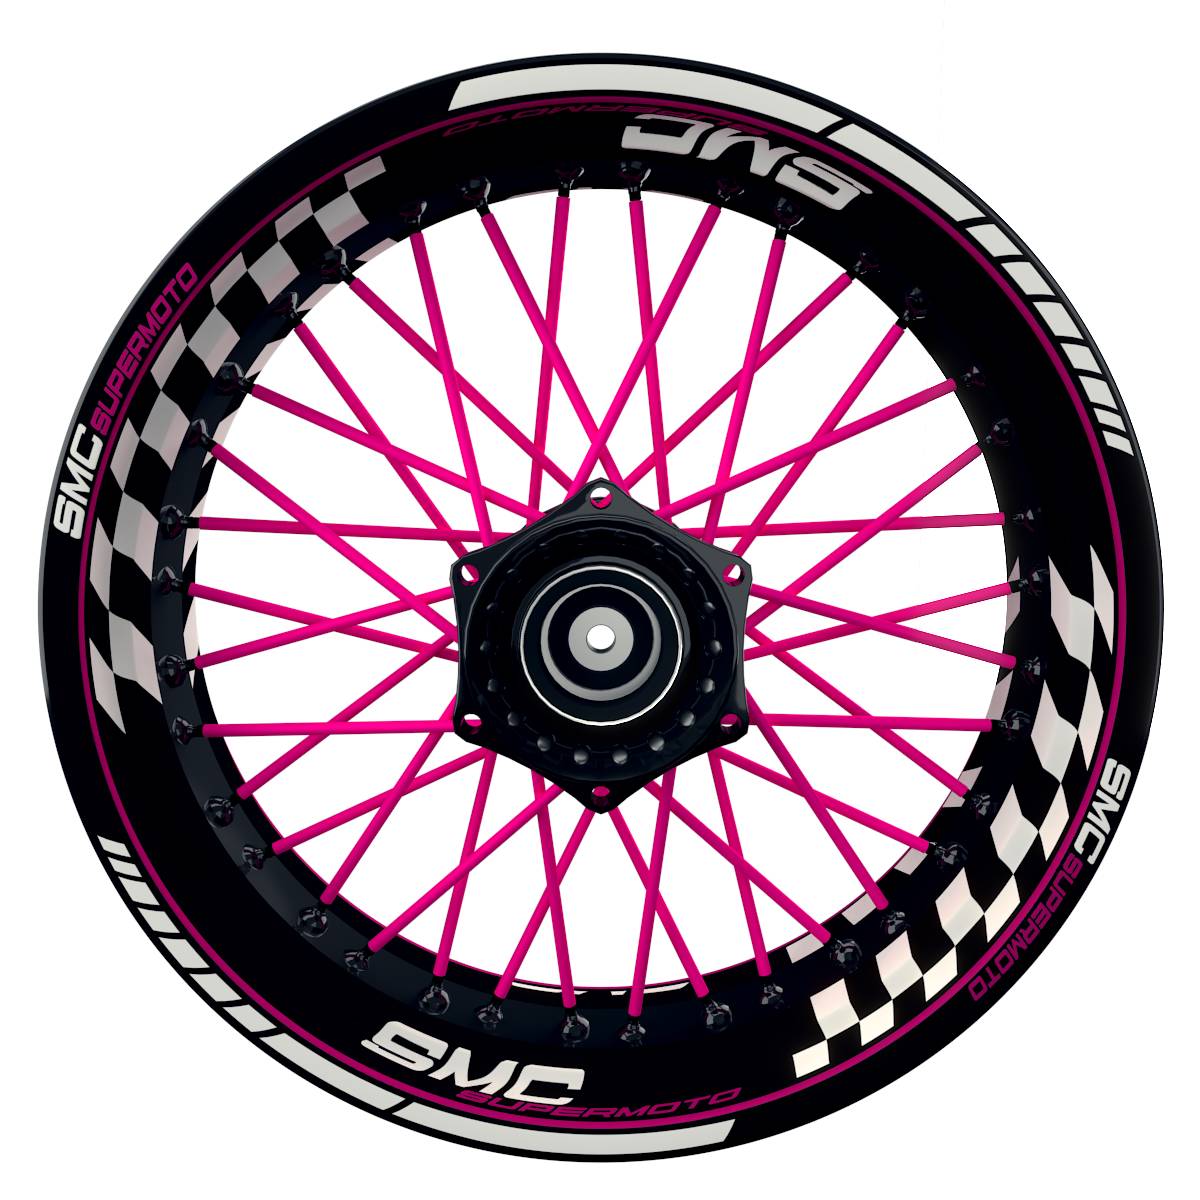 SMC Supermoto Grid schwarz pink Wheelsticker Felgenaufkleber